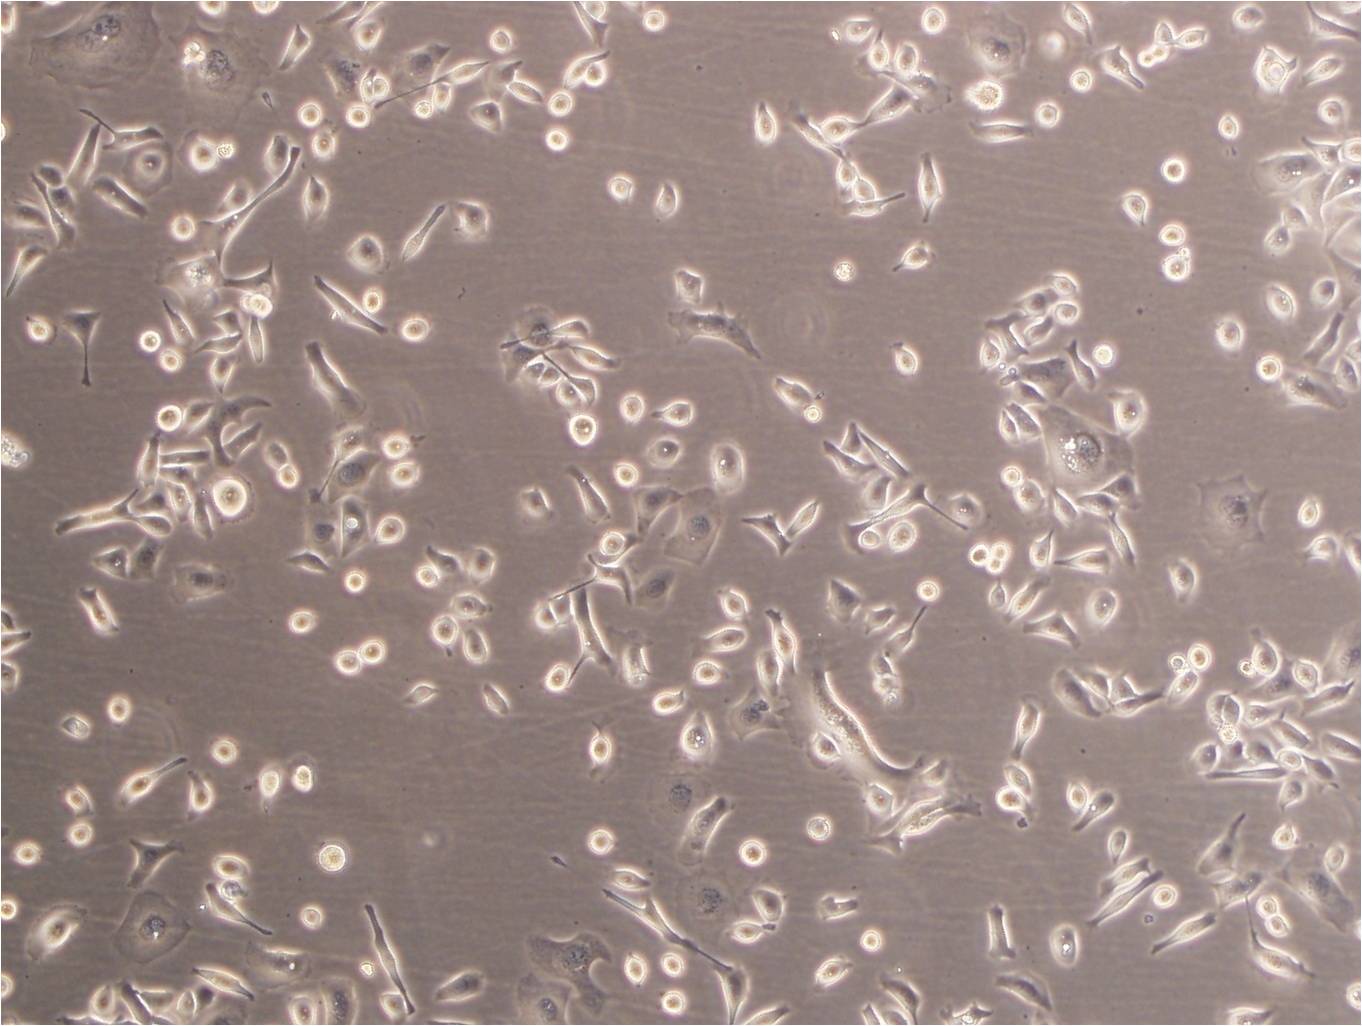 NSC-34 epithelioid cells鼠神经元细胞系,NSC-34 epithelioid cells